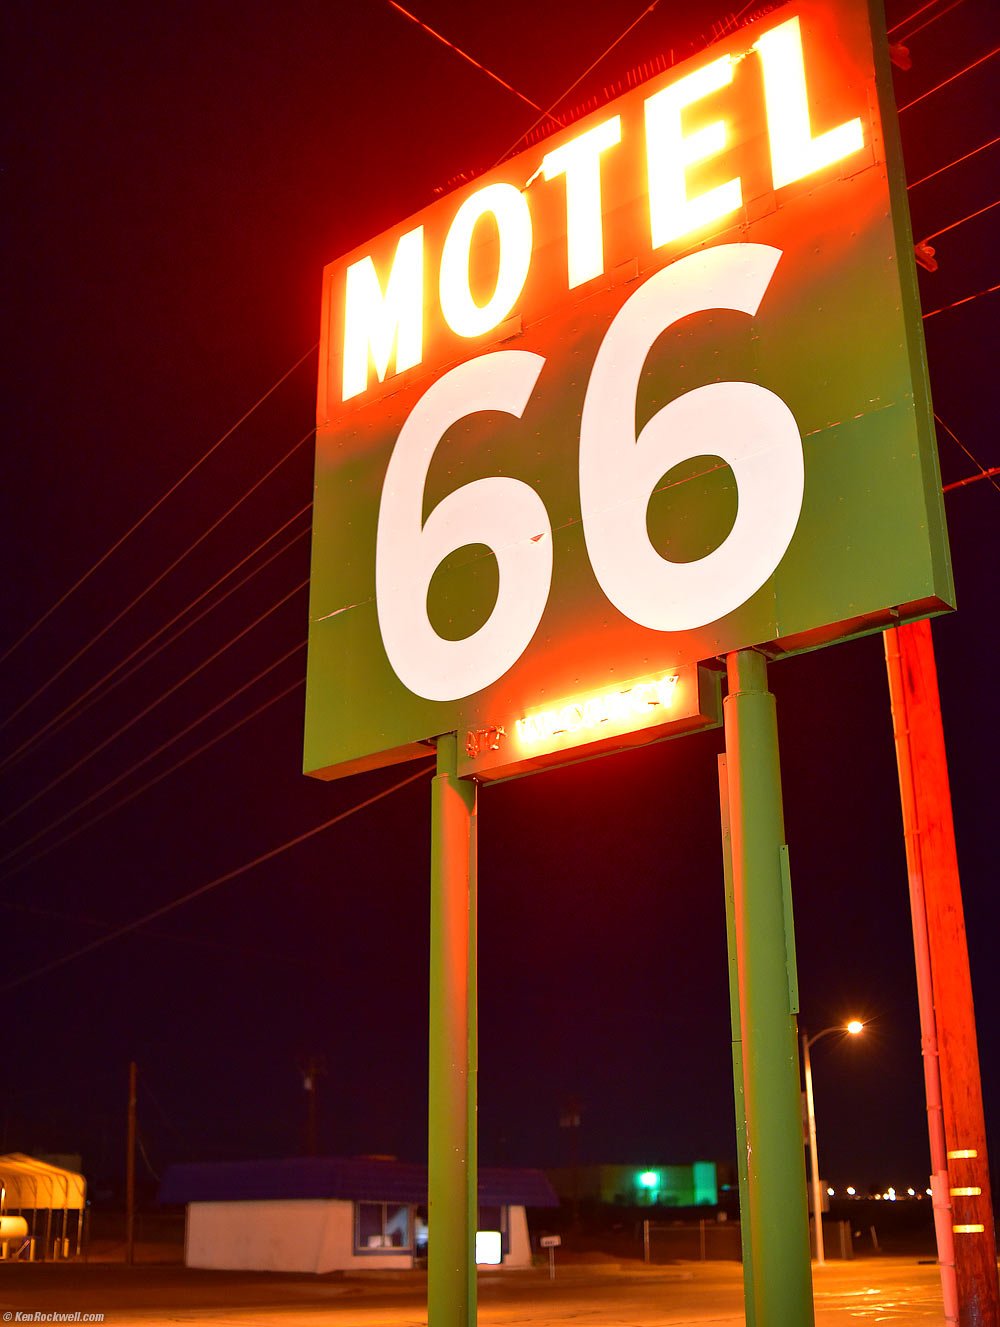 Motel 66 Sign at Night